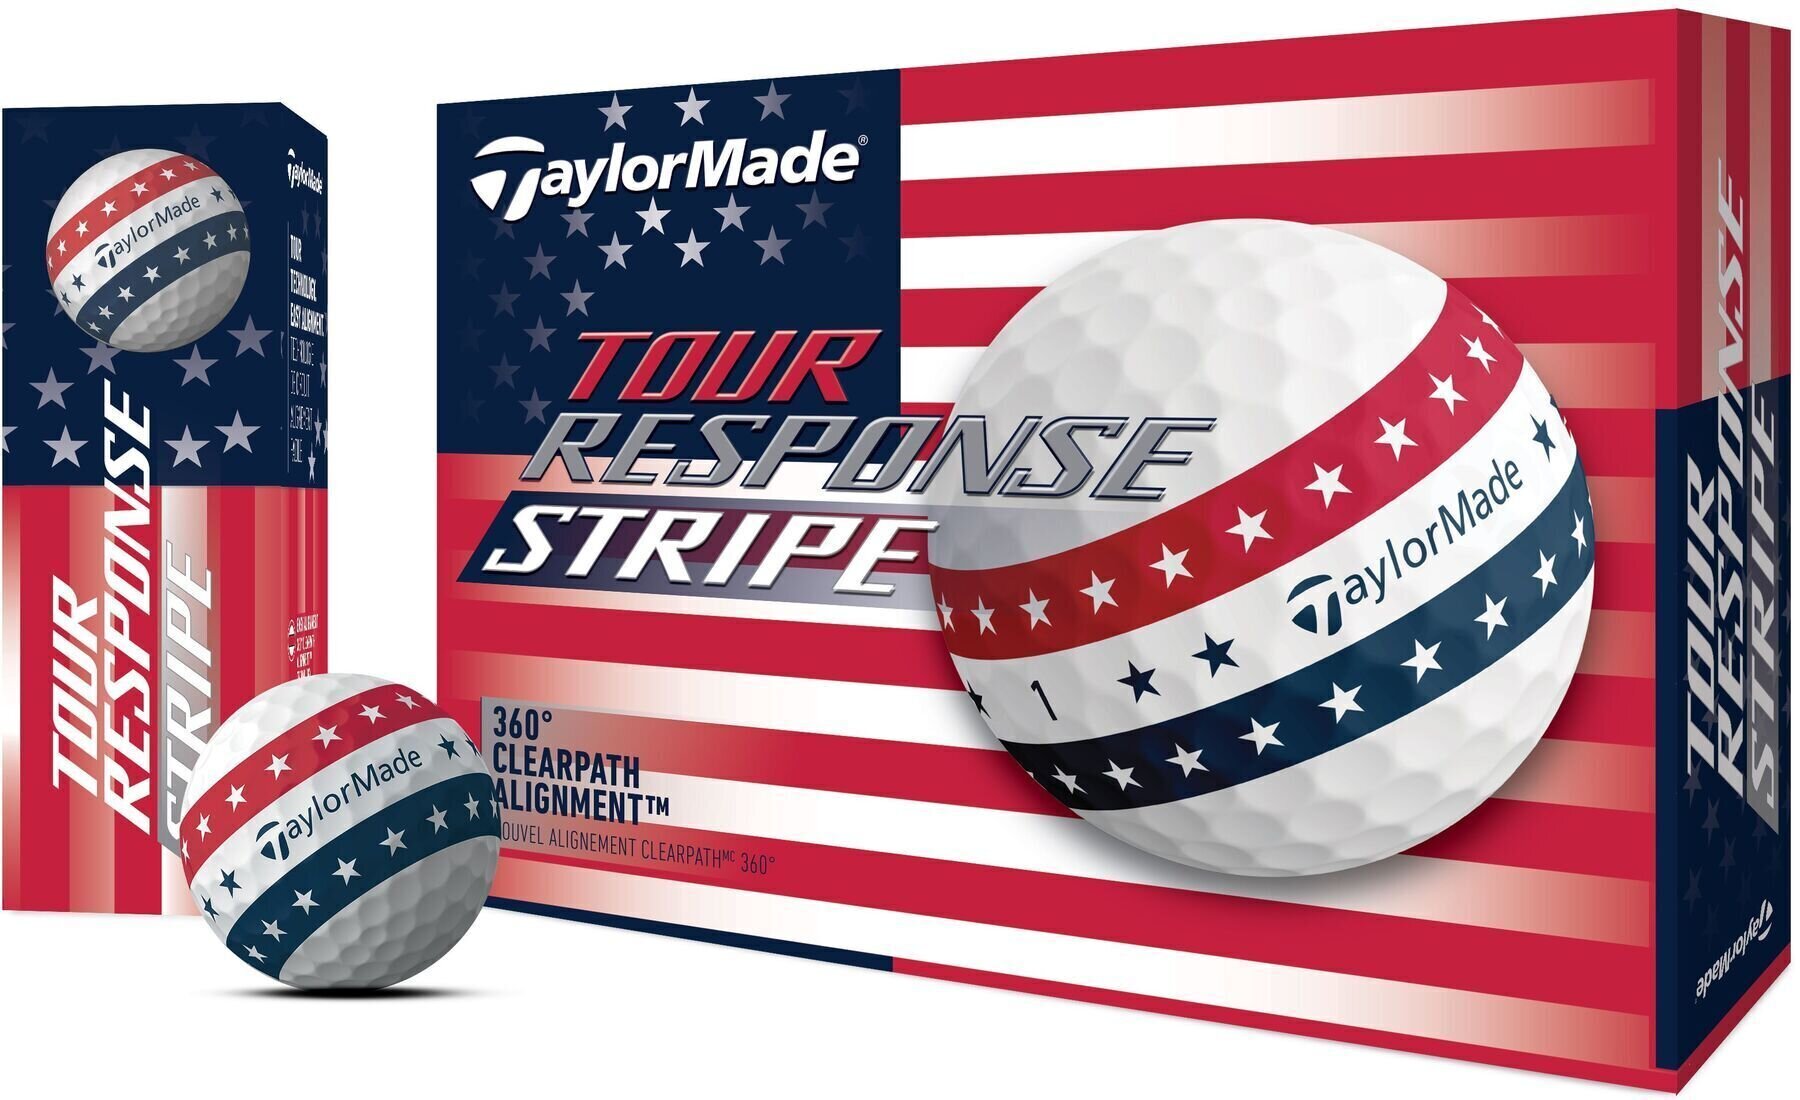 Minge de golf TaylorMade Tour Response Stripe Minge de golf